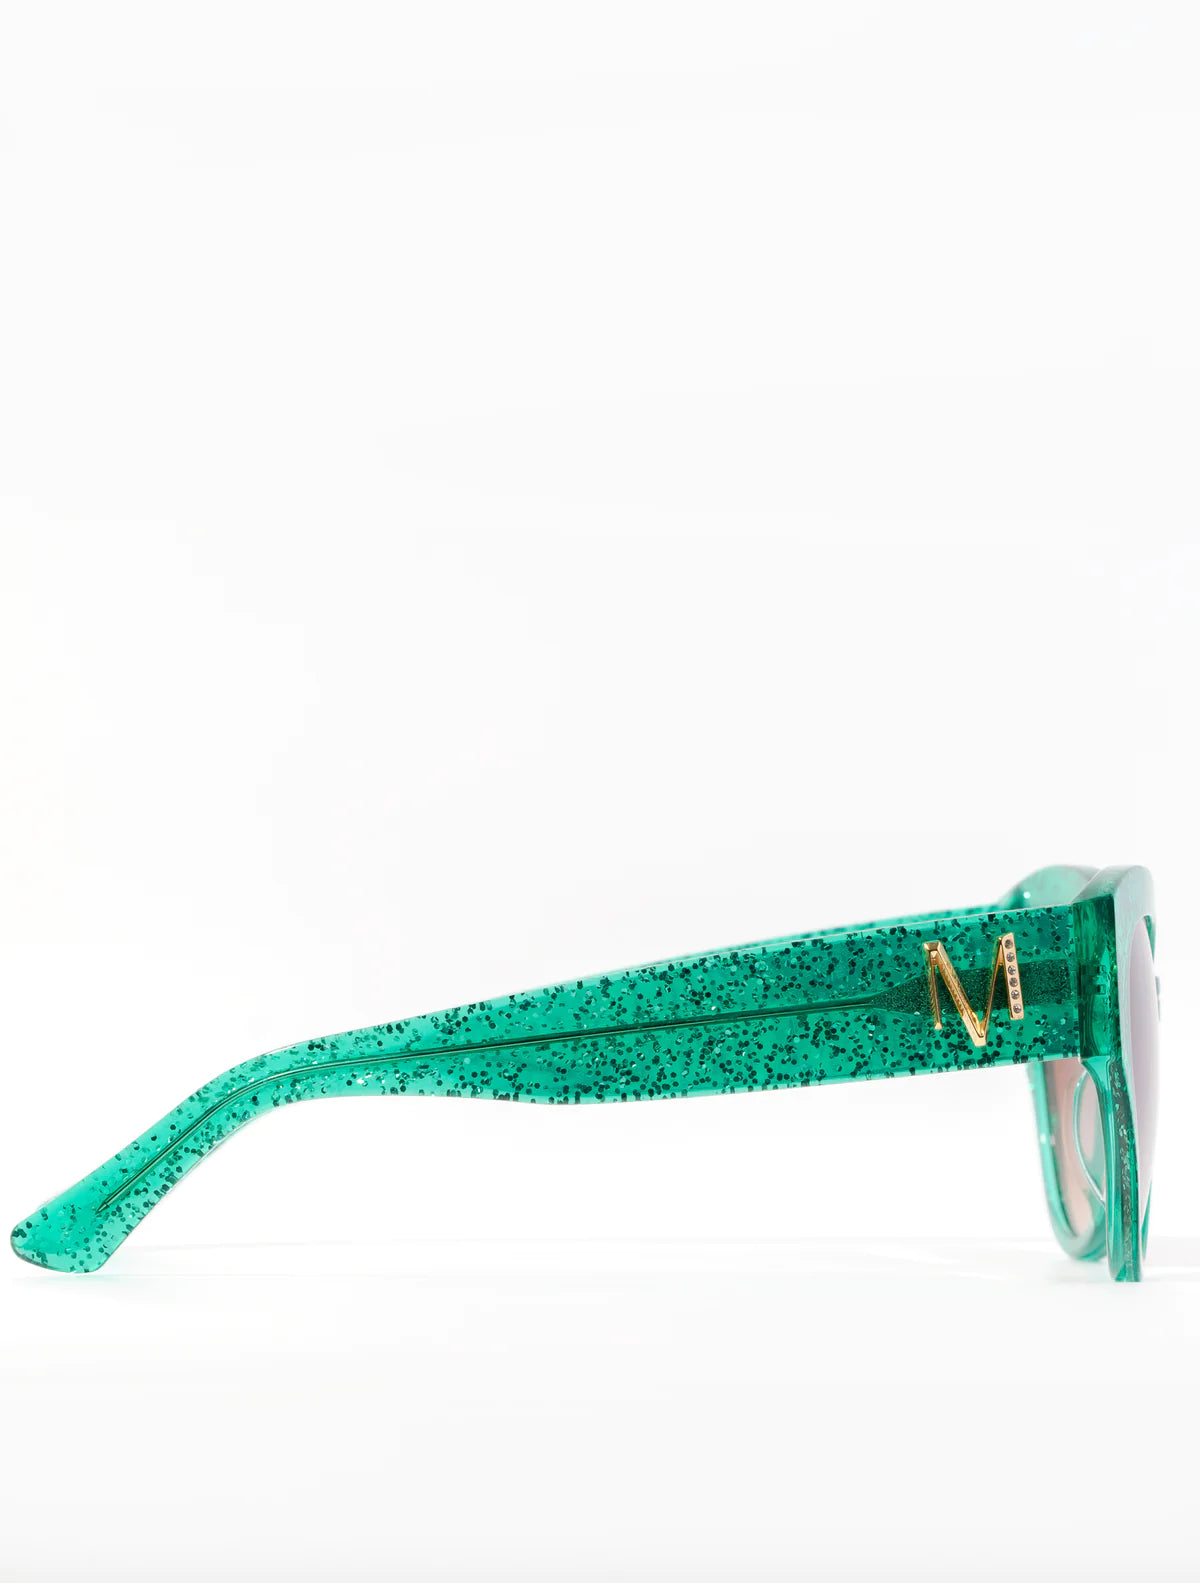 Emeralda Sunglasses